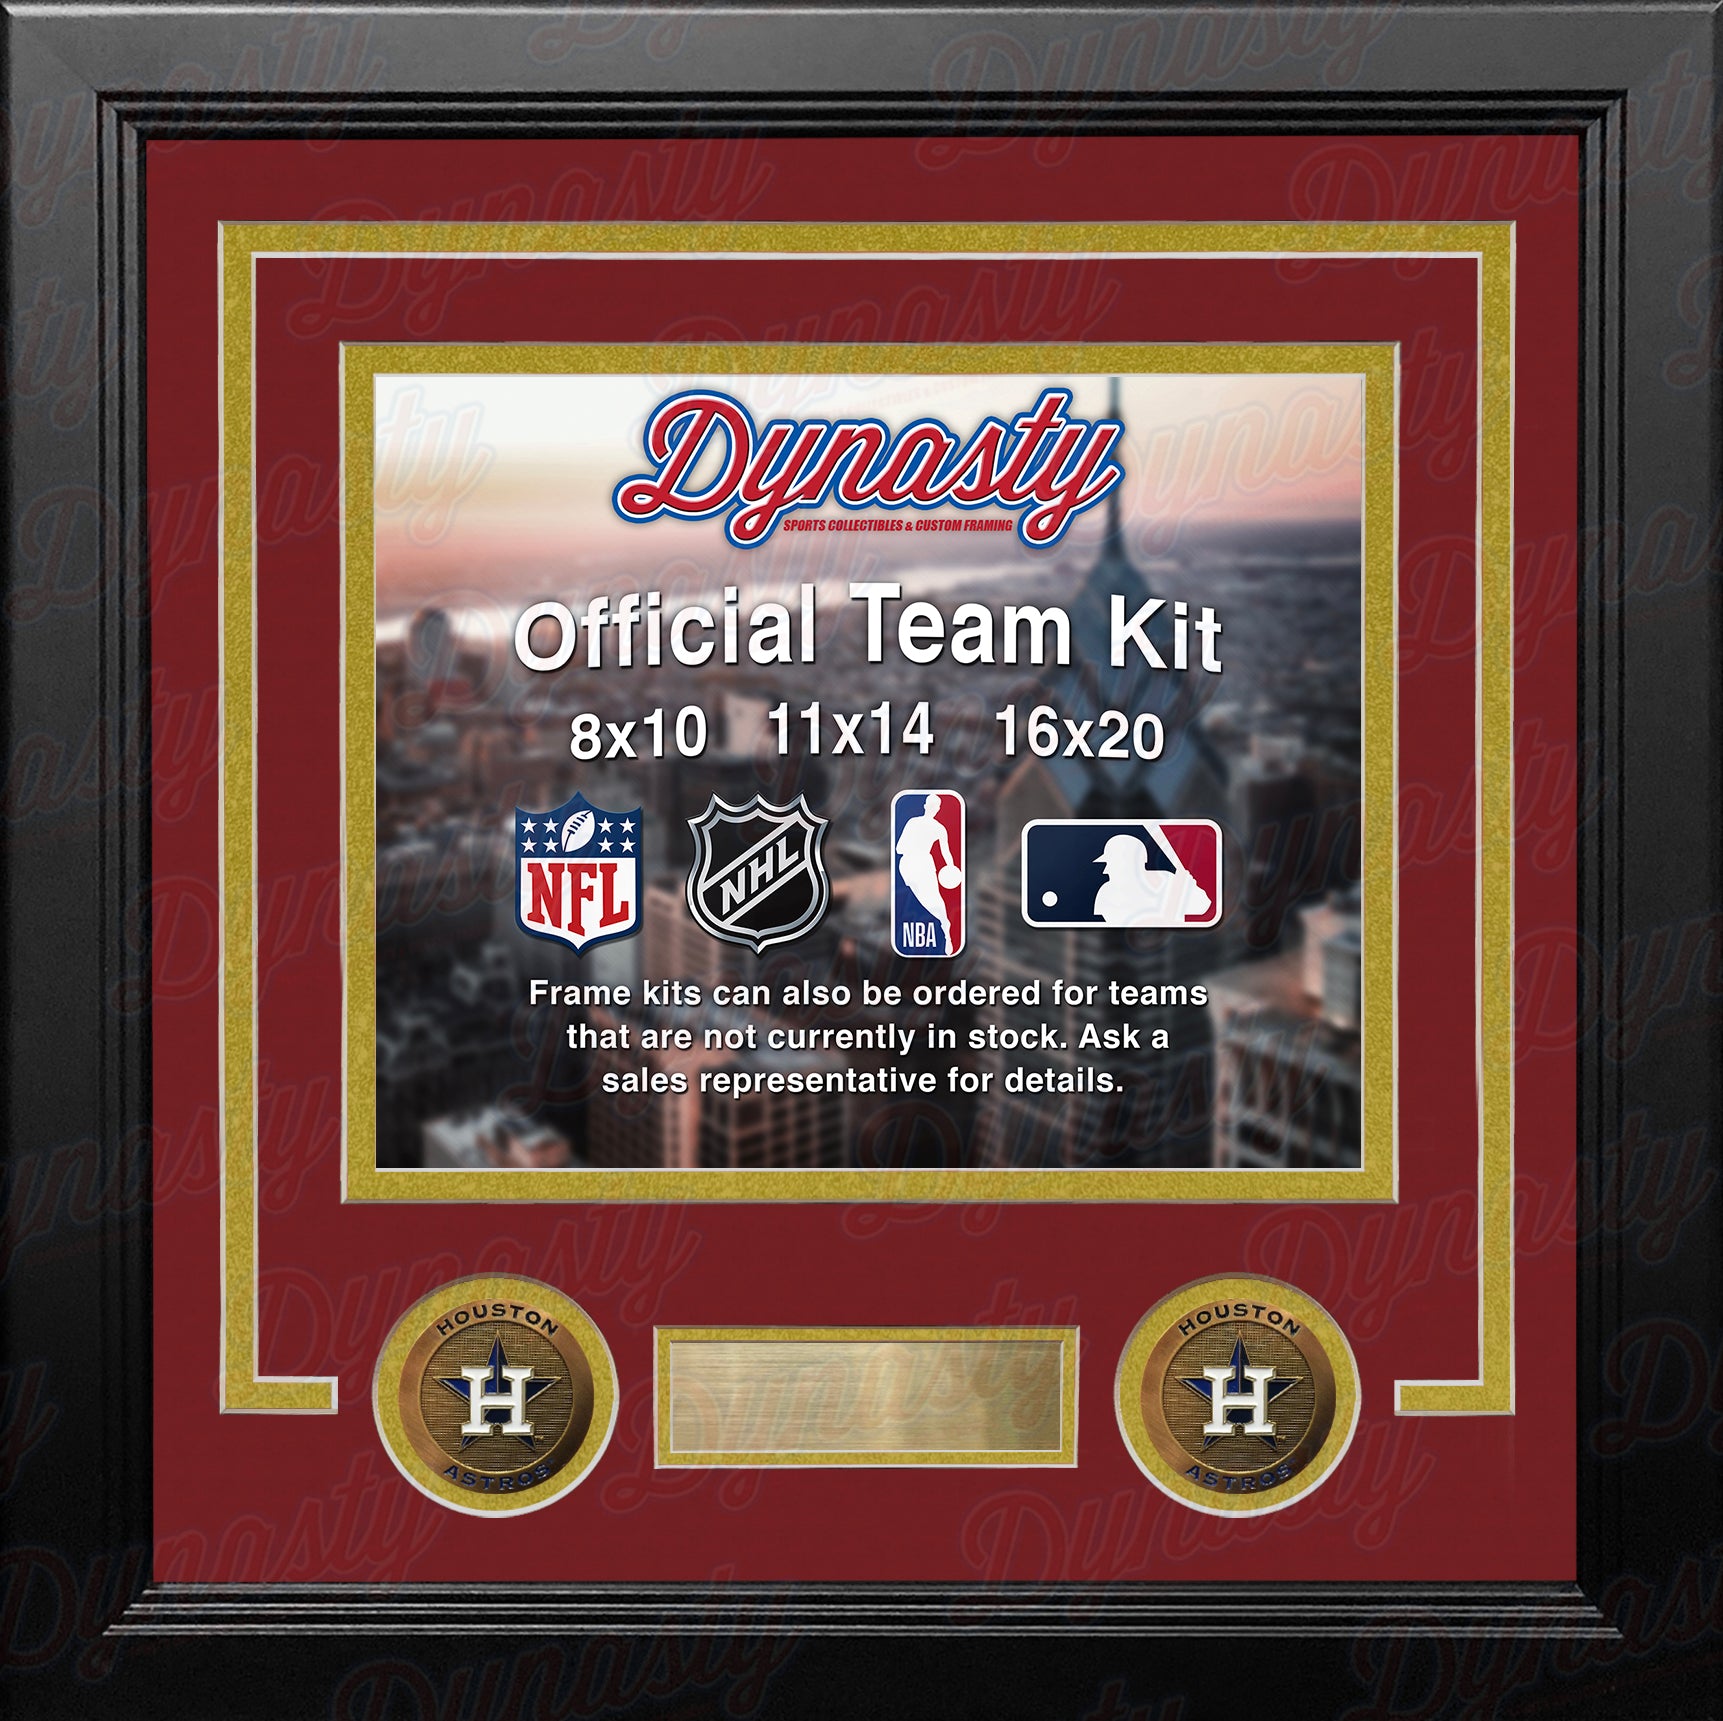 MLB Baseball Photo Picture Frame Kit - Houston Astros (Brick Red Matting, Gold Trim) - Dynasty Sports & Framing 